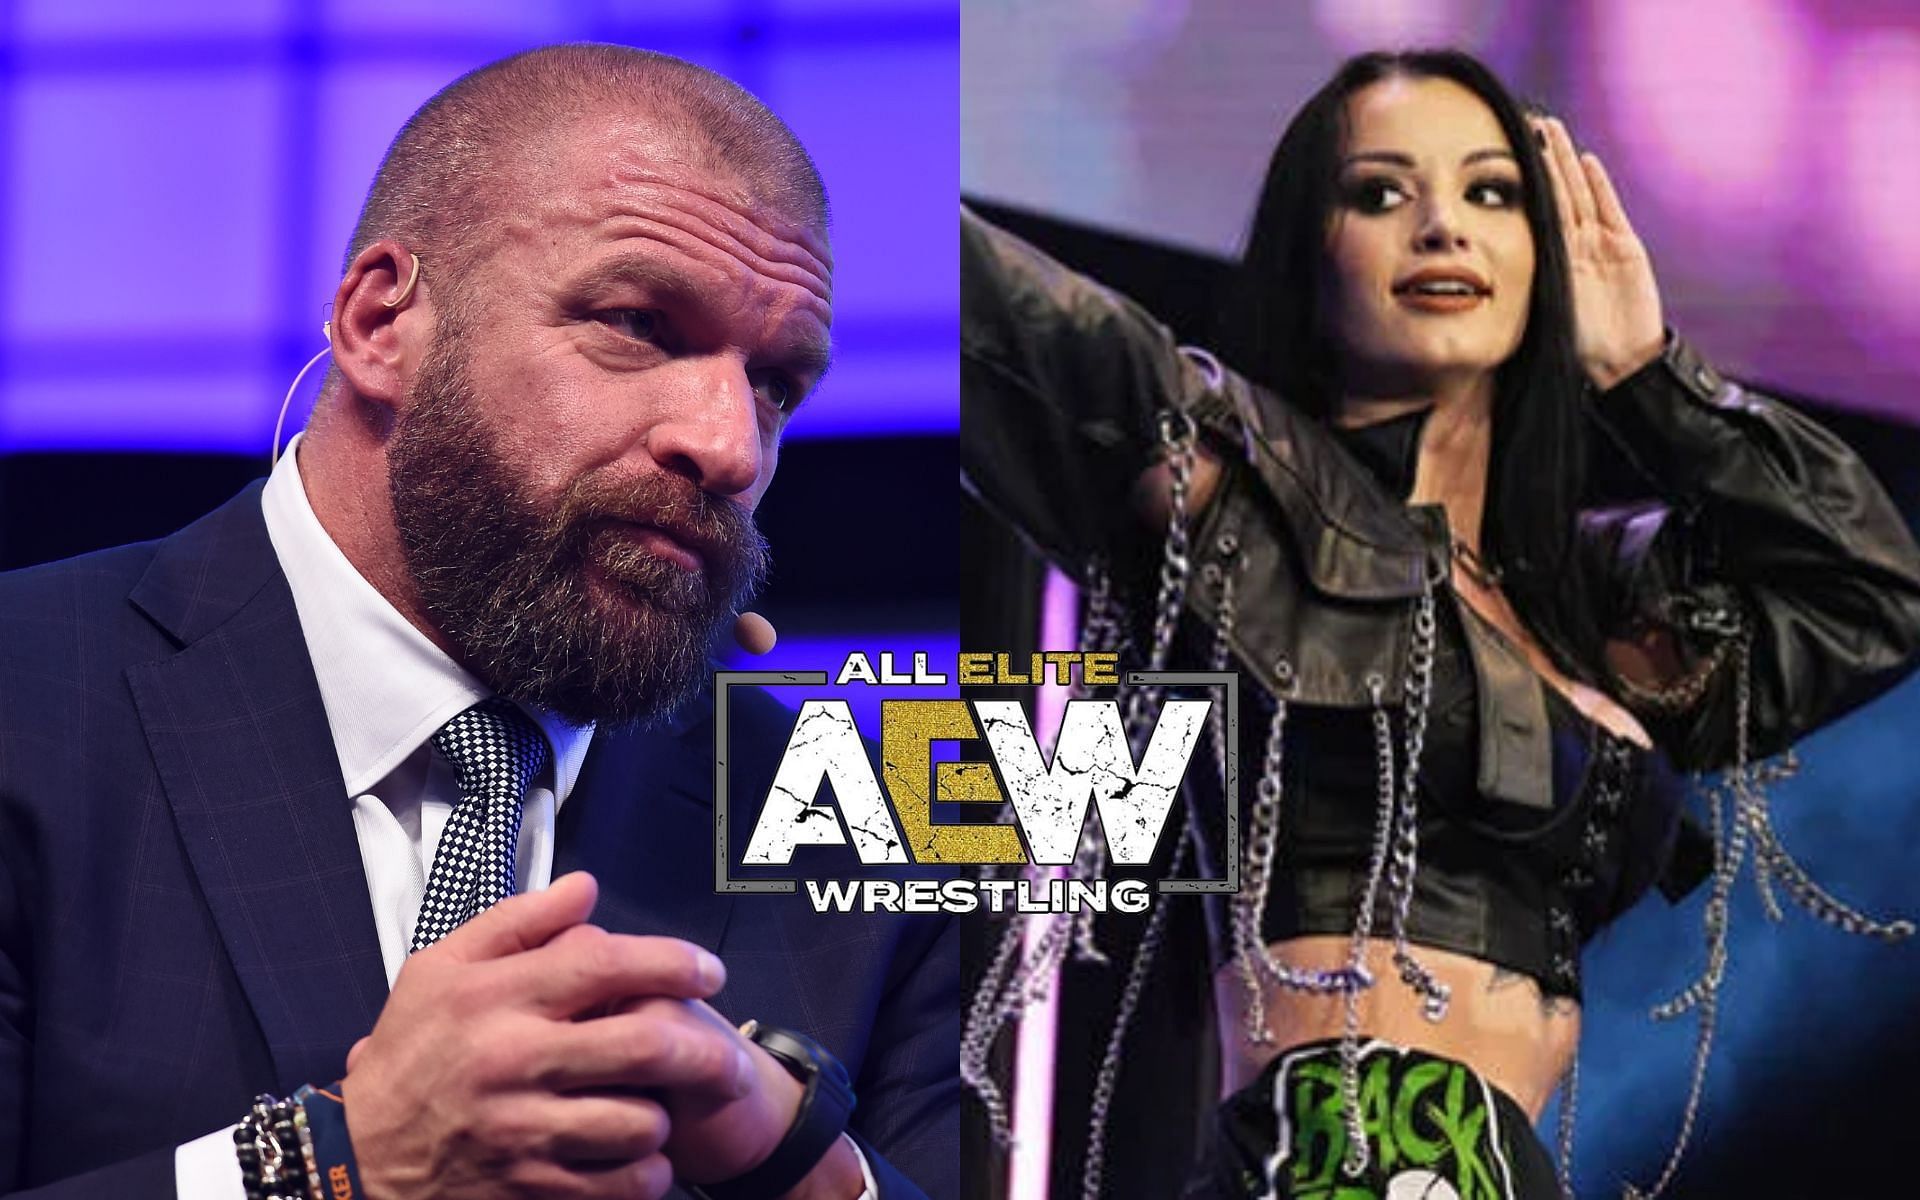 WWE Head of Creative Triple H (left) and AEW star Saraya (right).